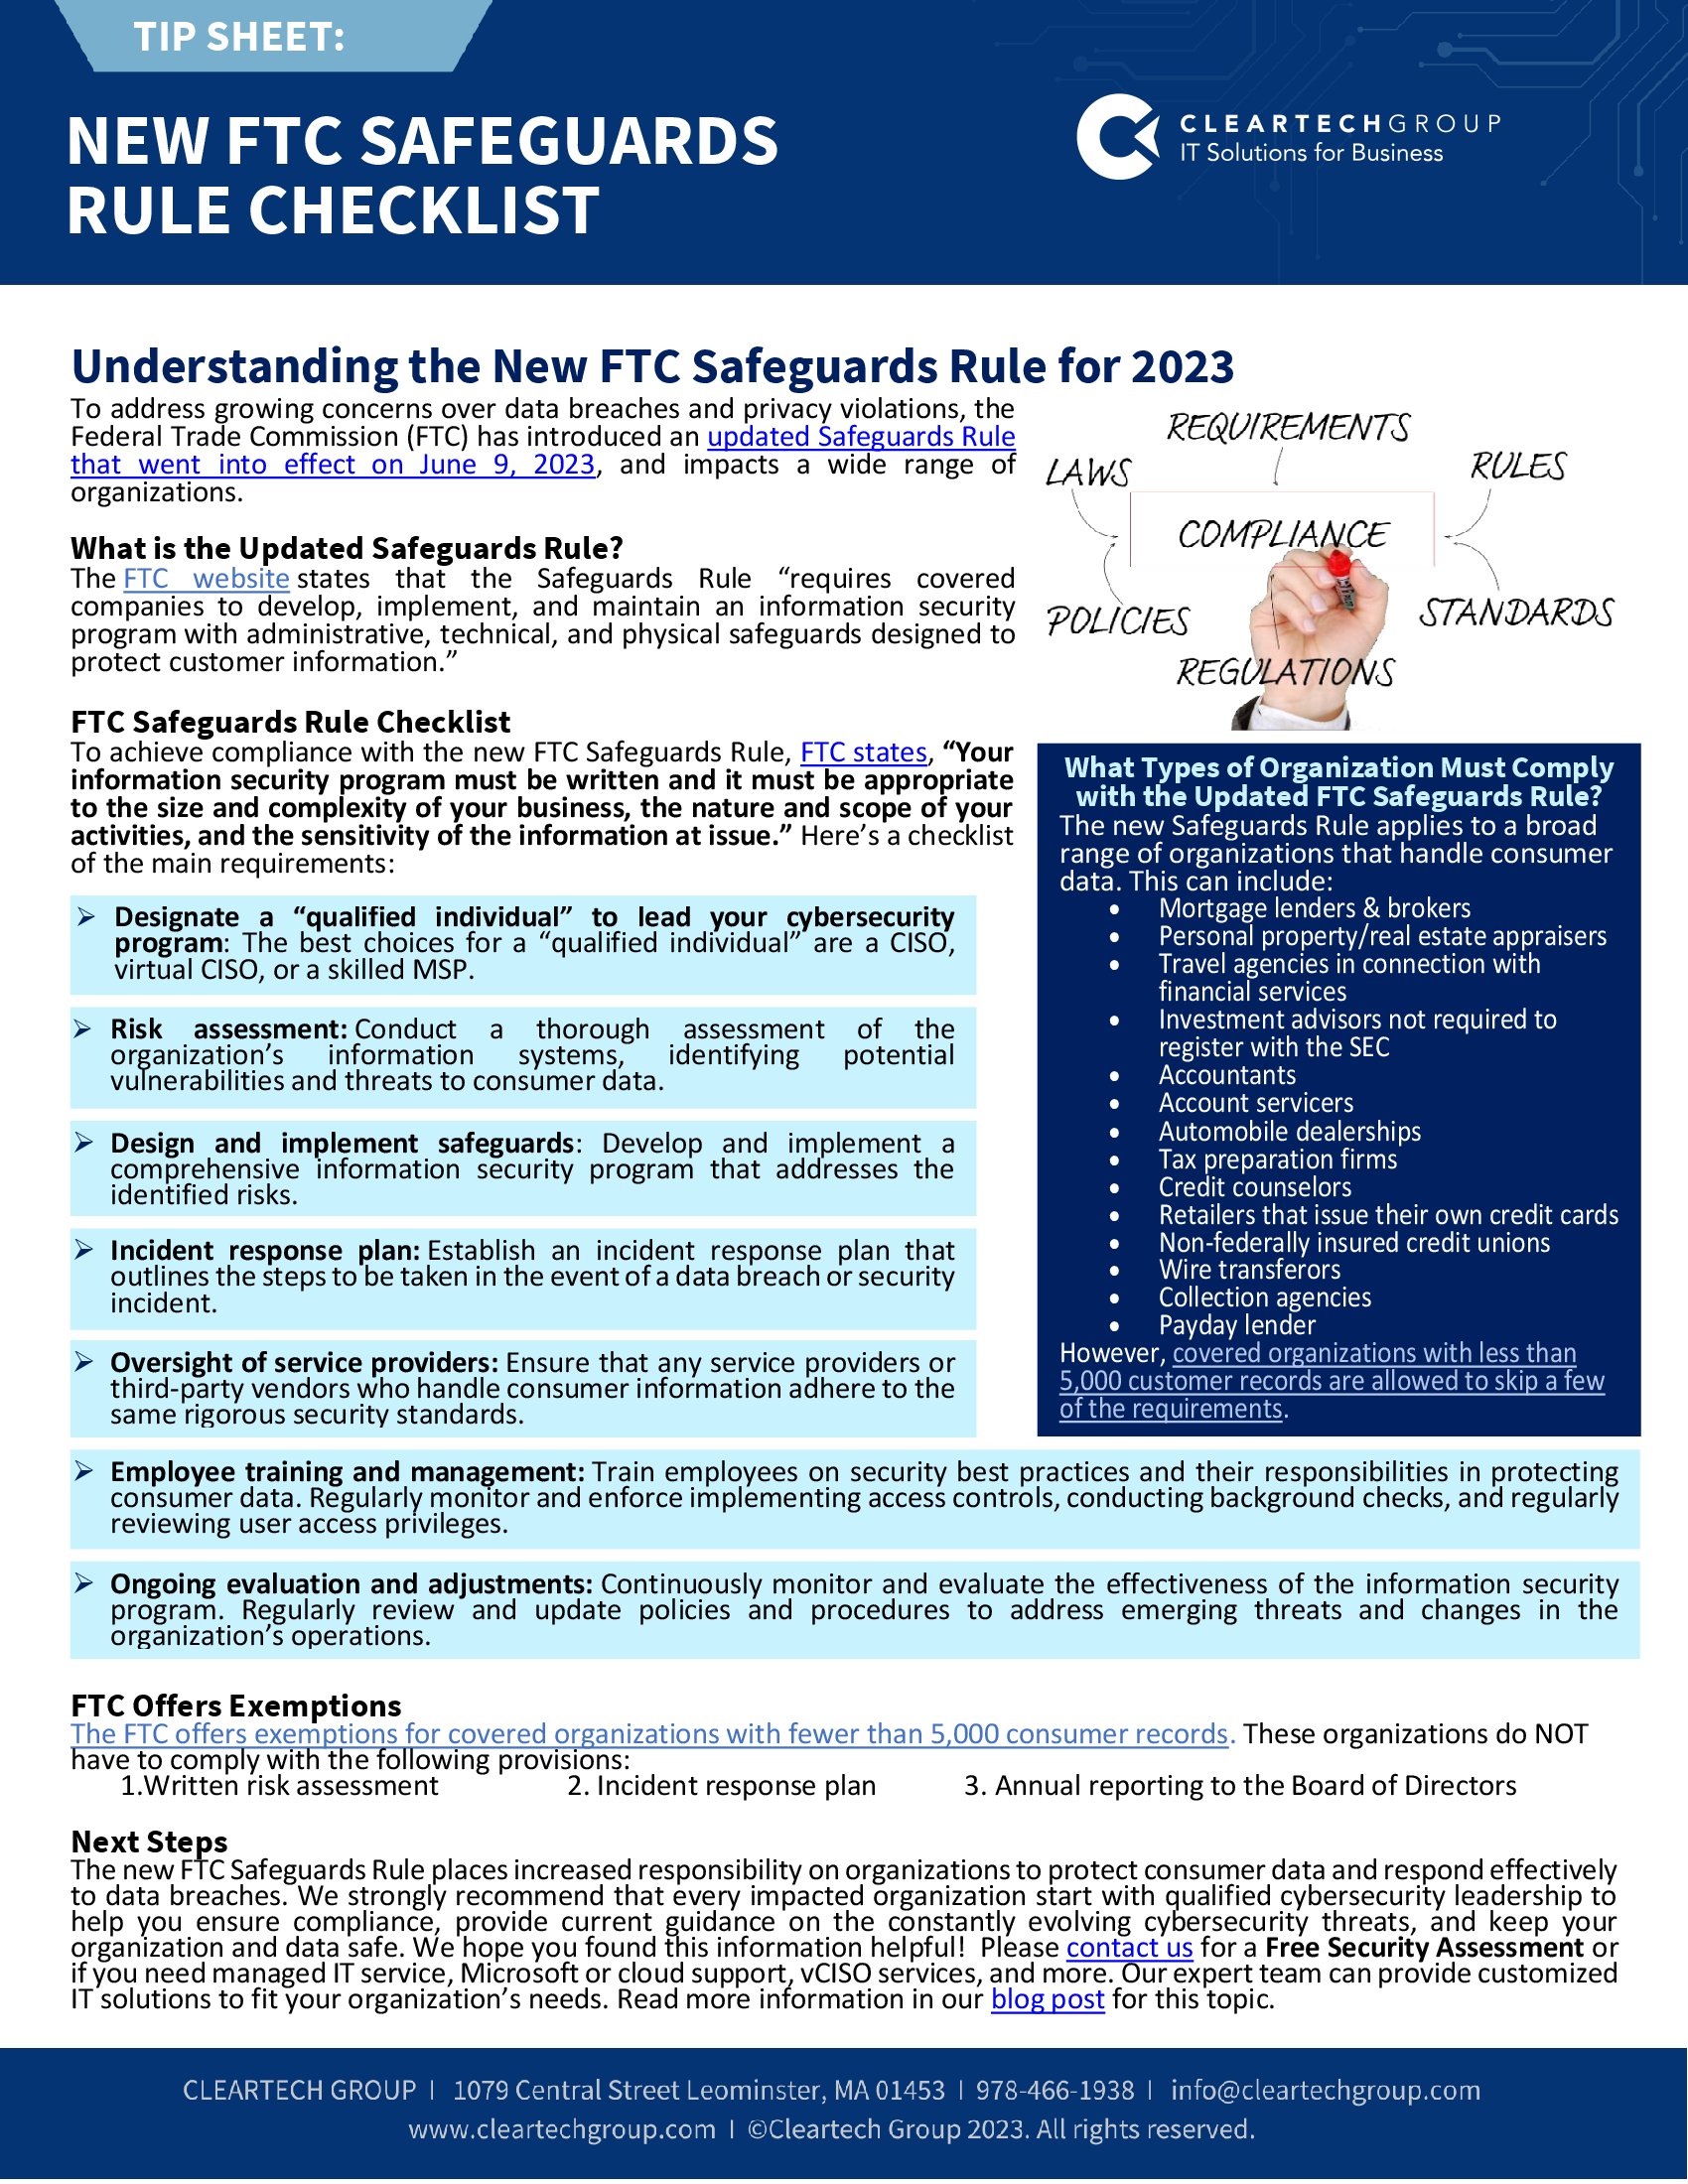 FTC safeguards checklist